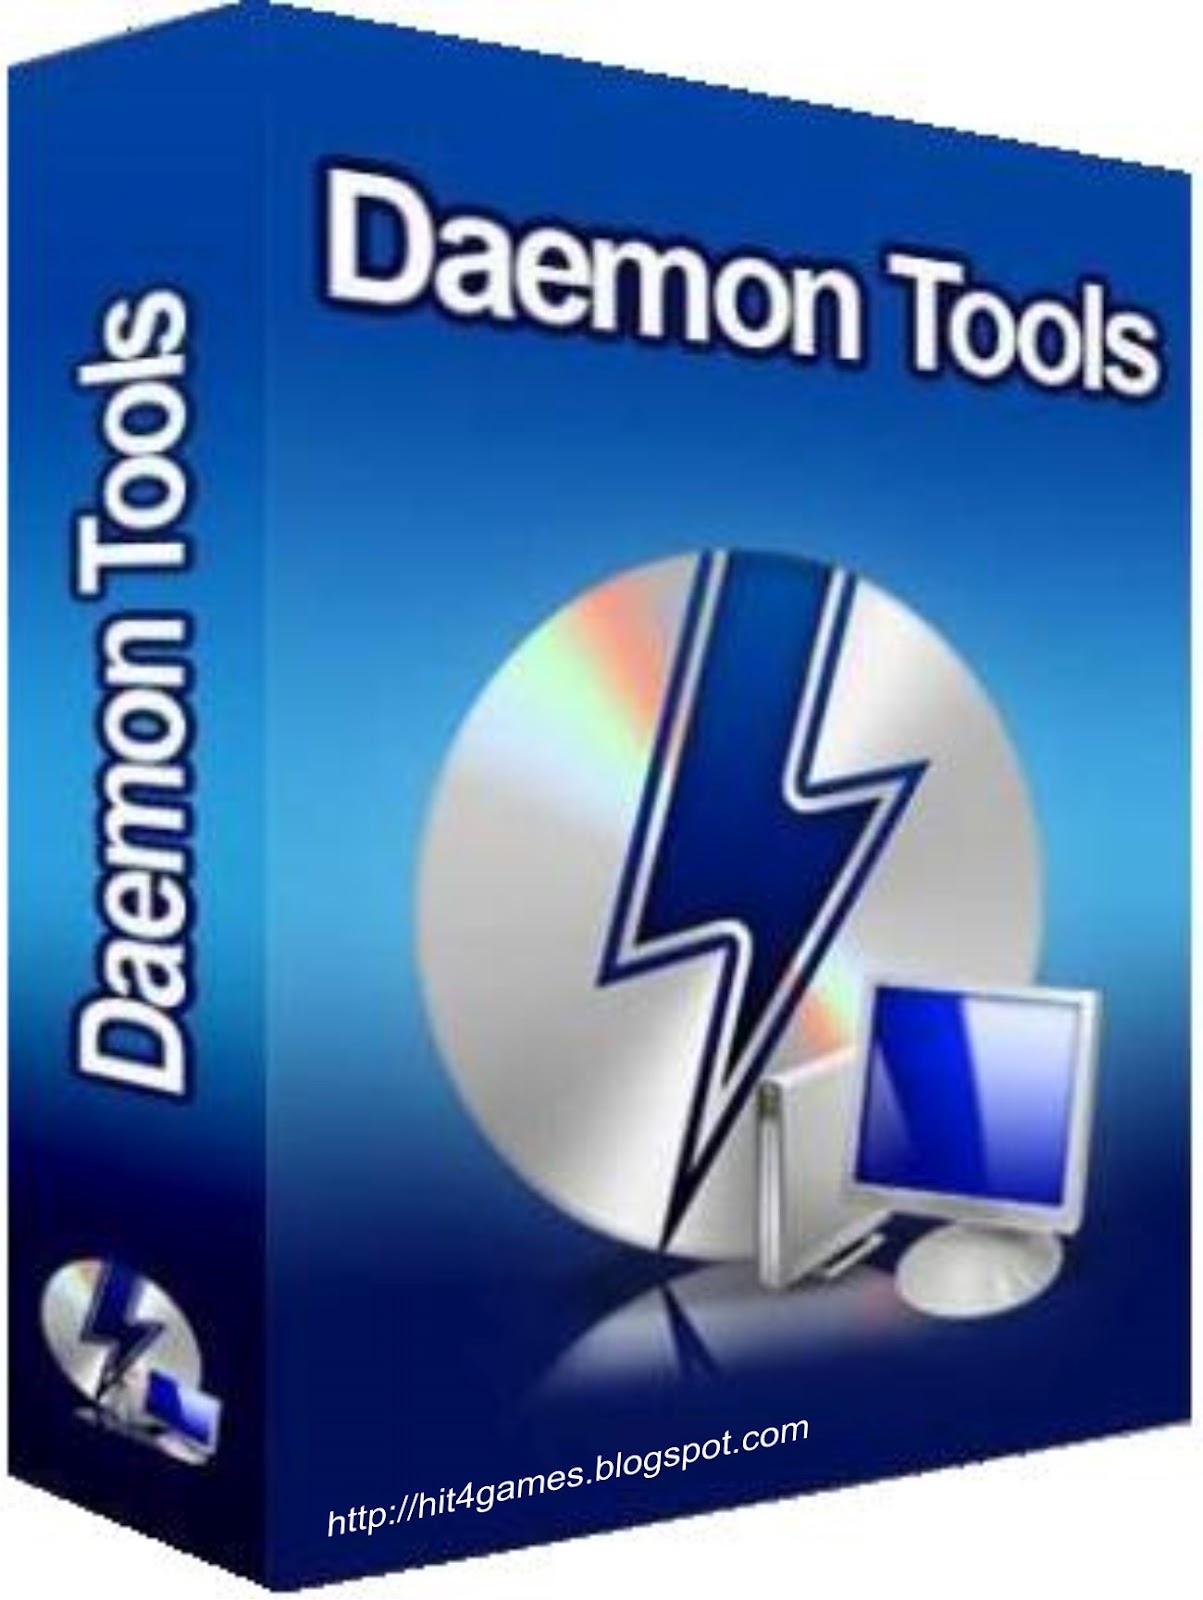 Daemon tools lite 4 11 2 working keygen serials